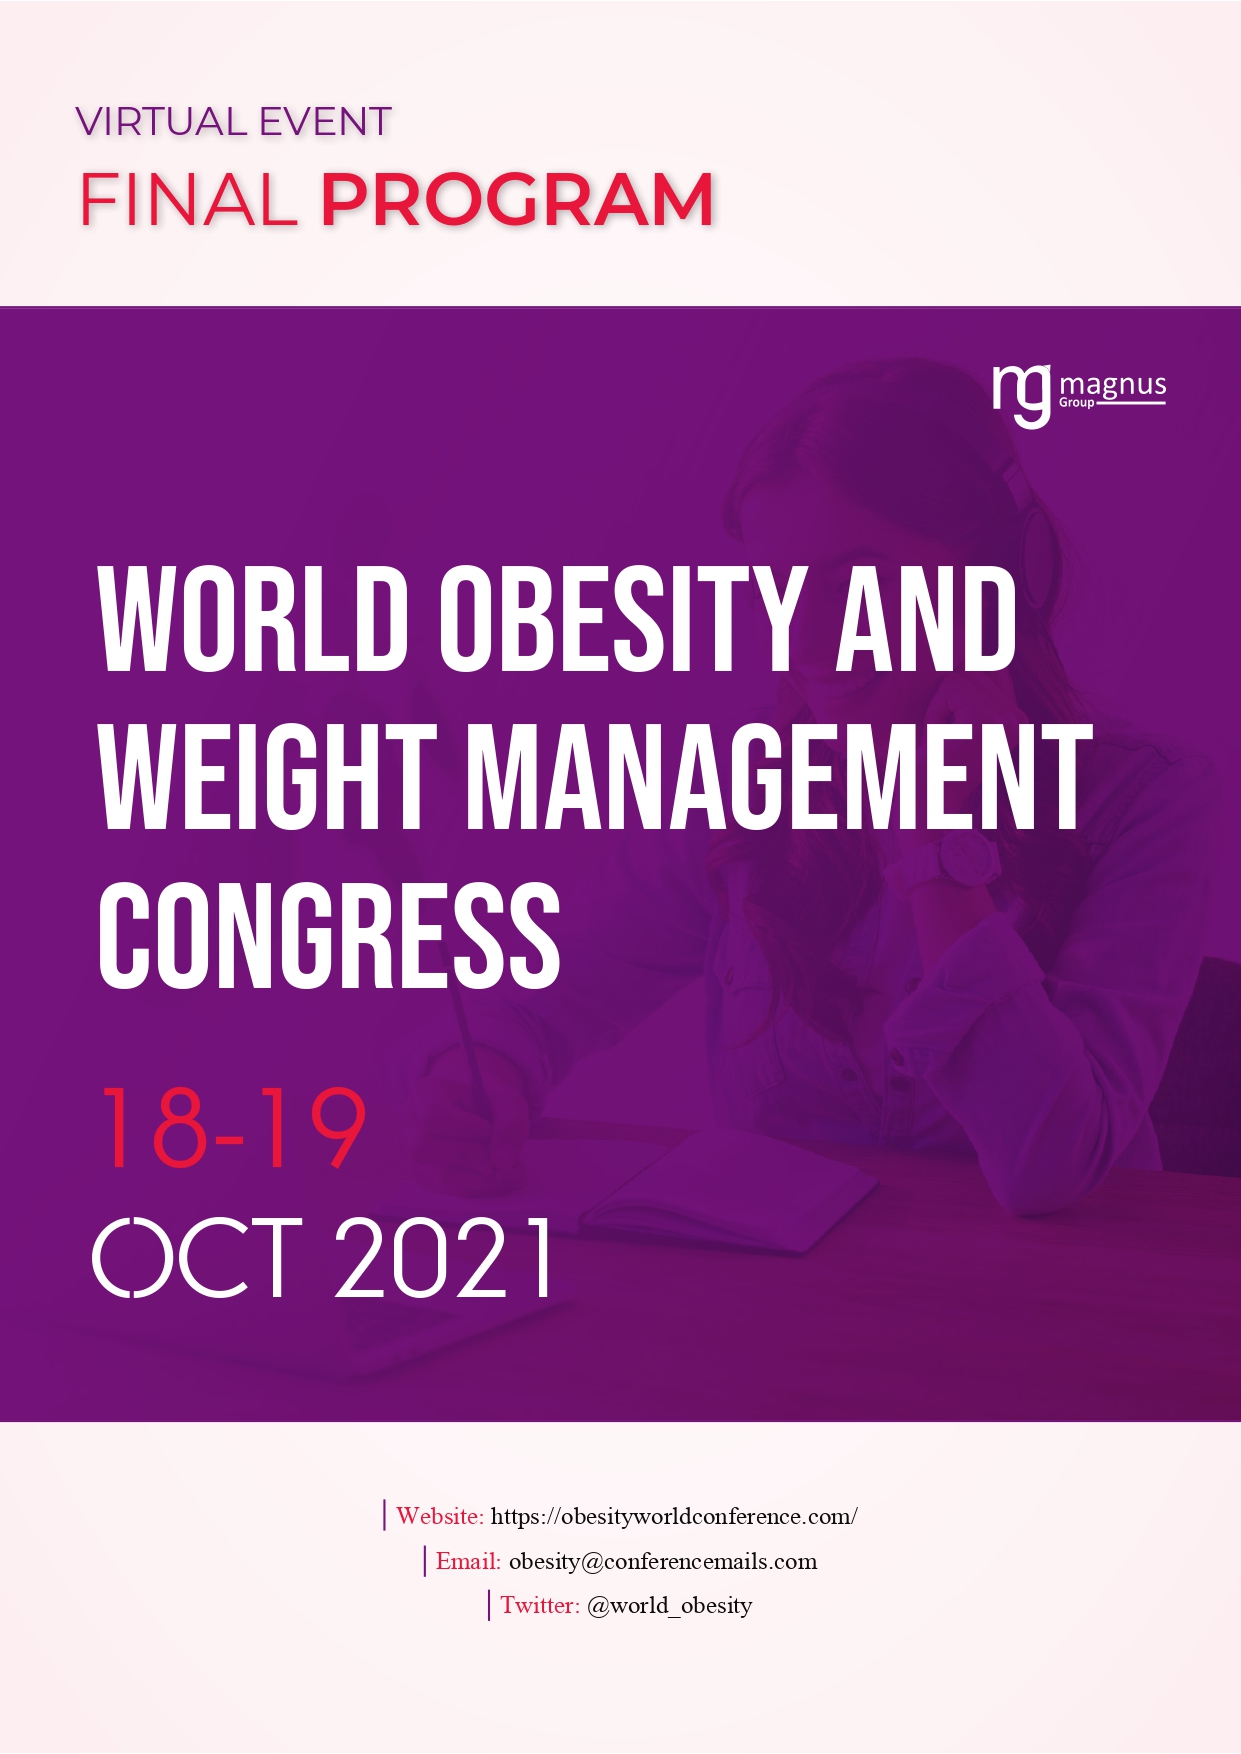 World Obesity and Weight Management Congress | Online Event Program